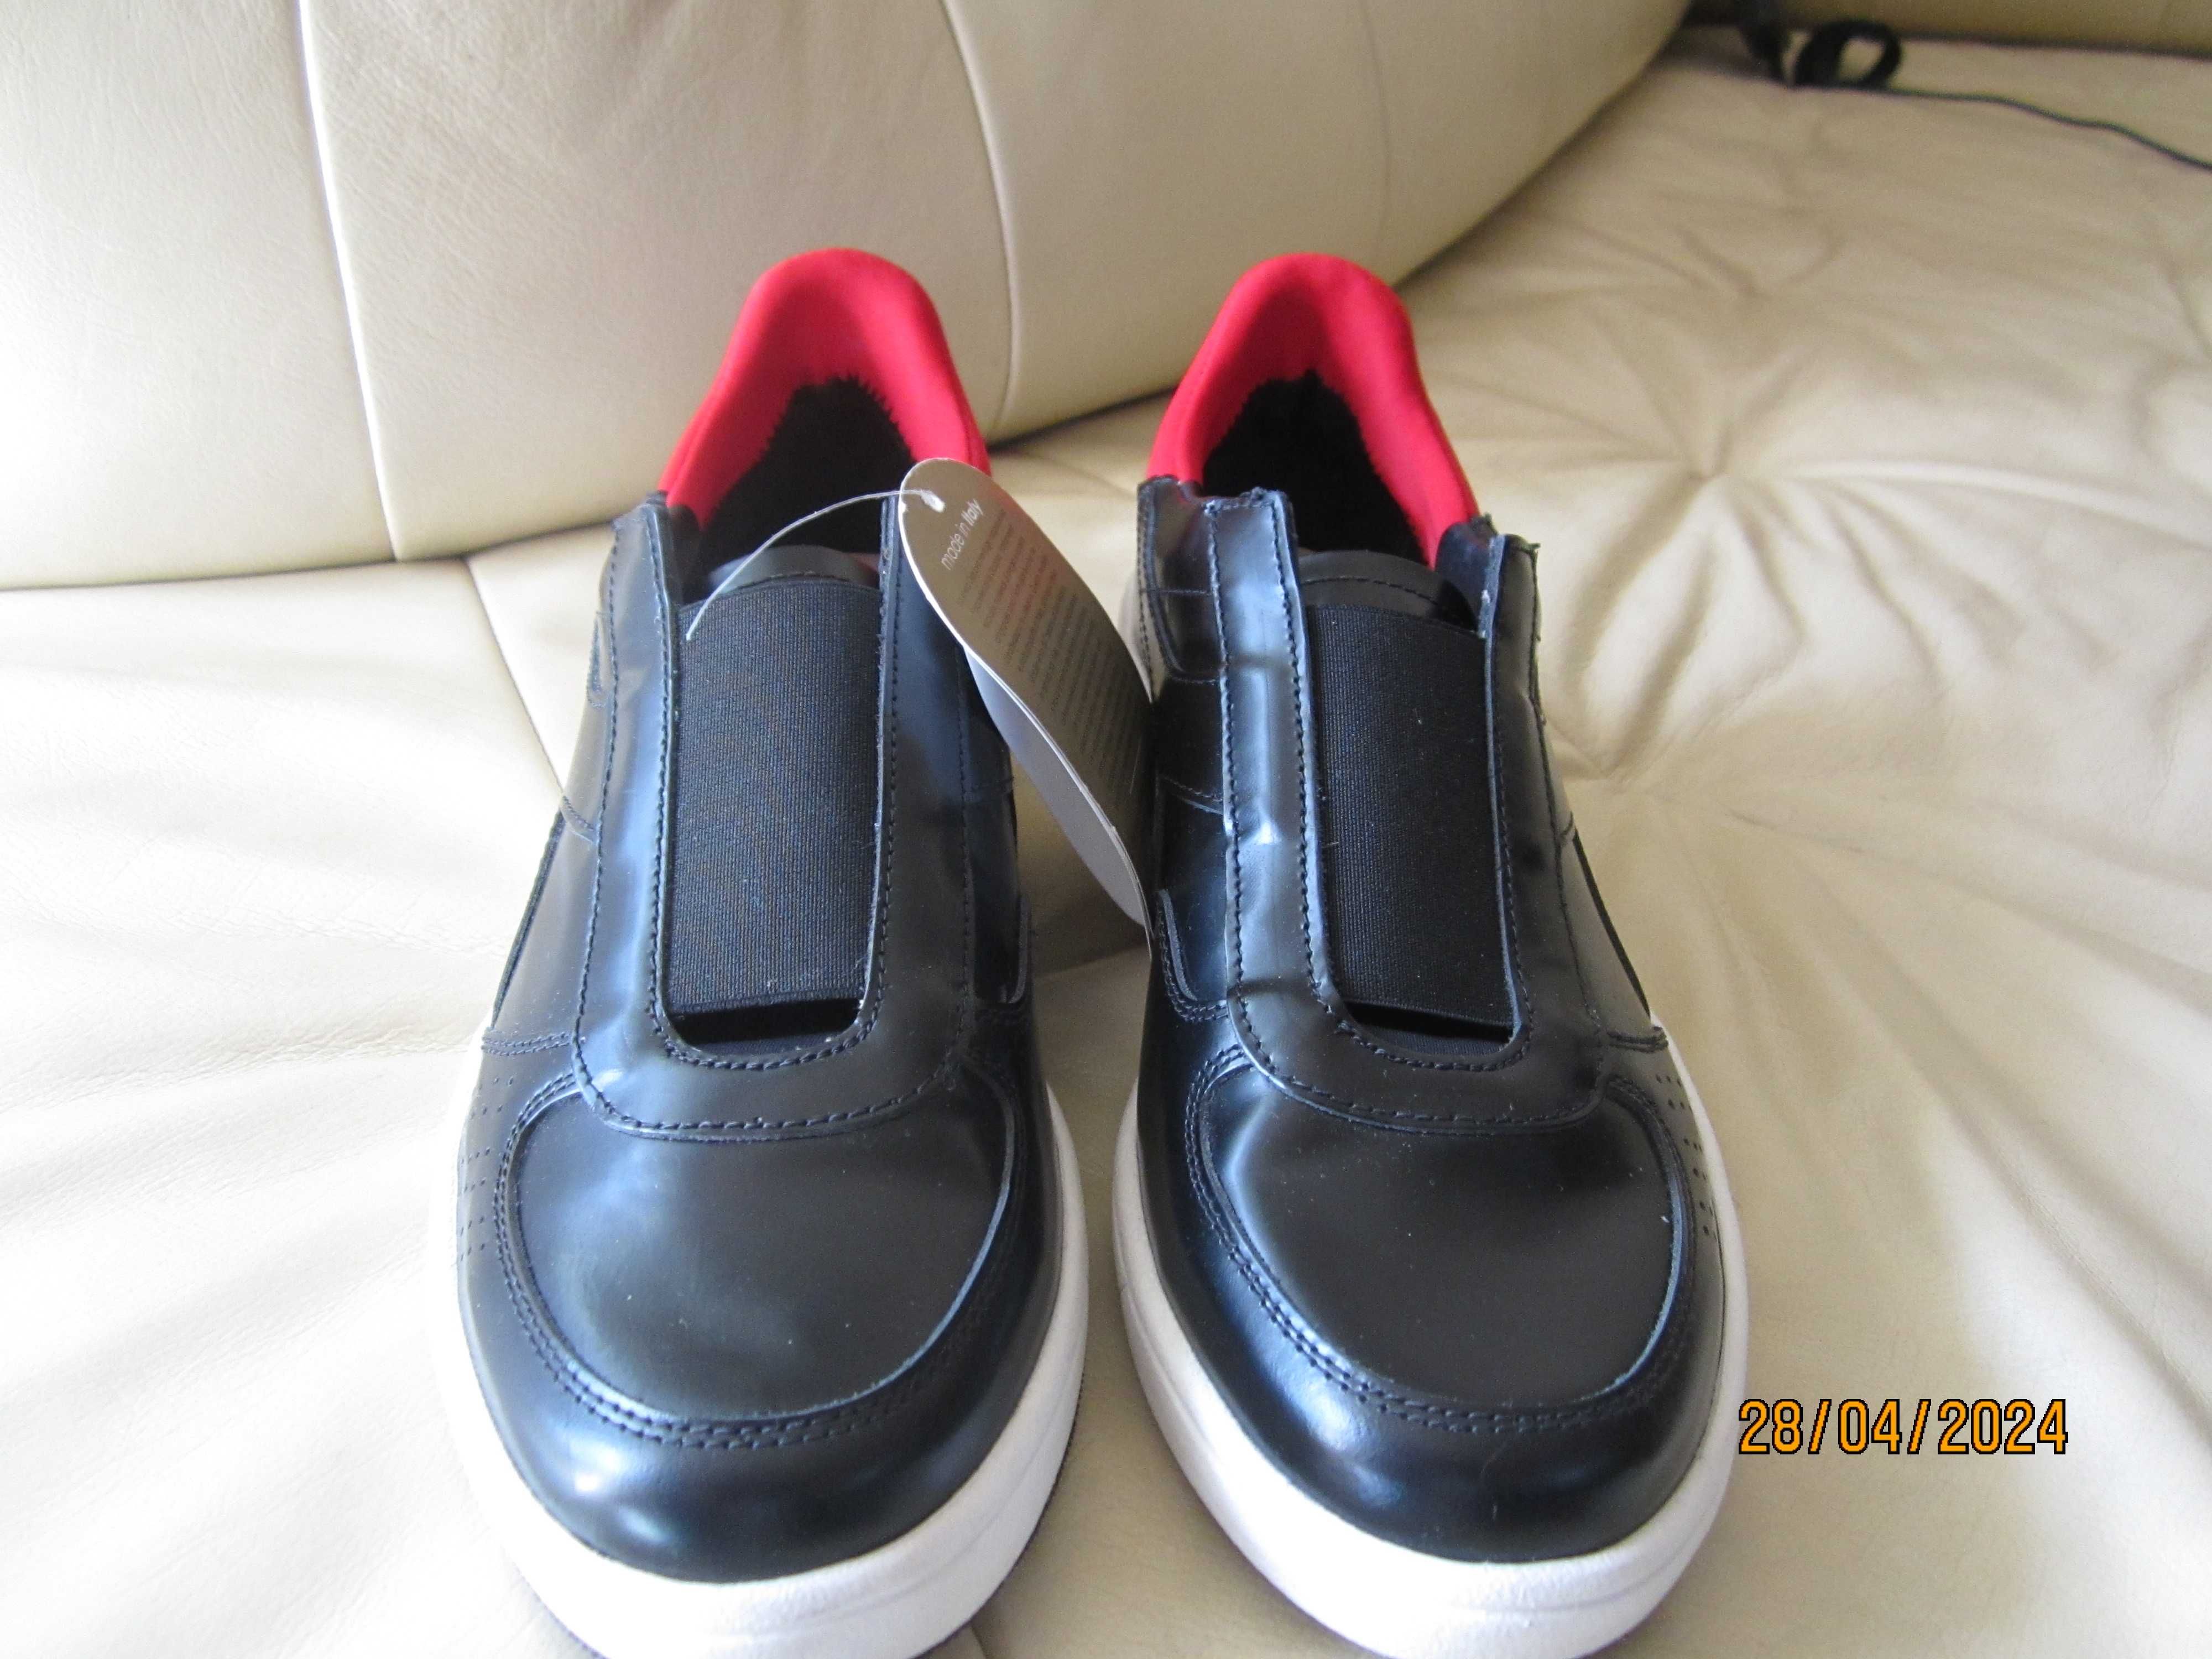 Piękne nowe buty damskie Diadora rozmiar 40